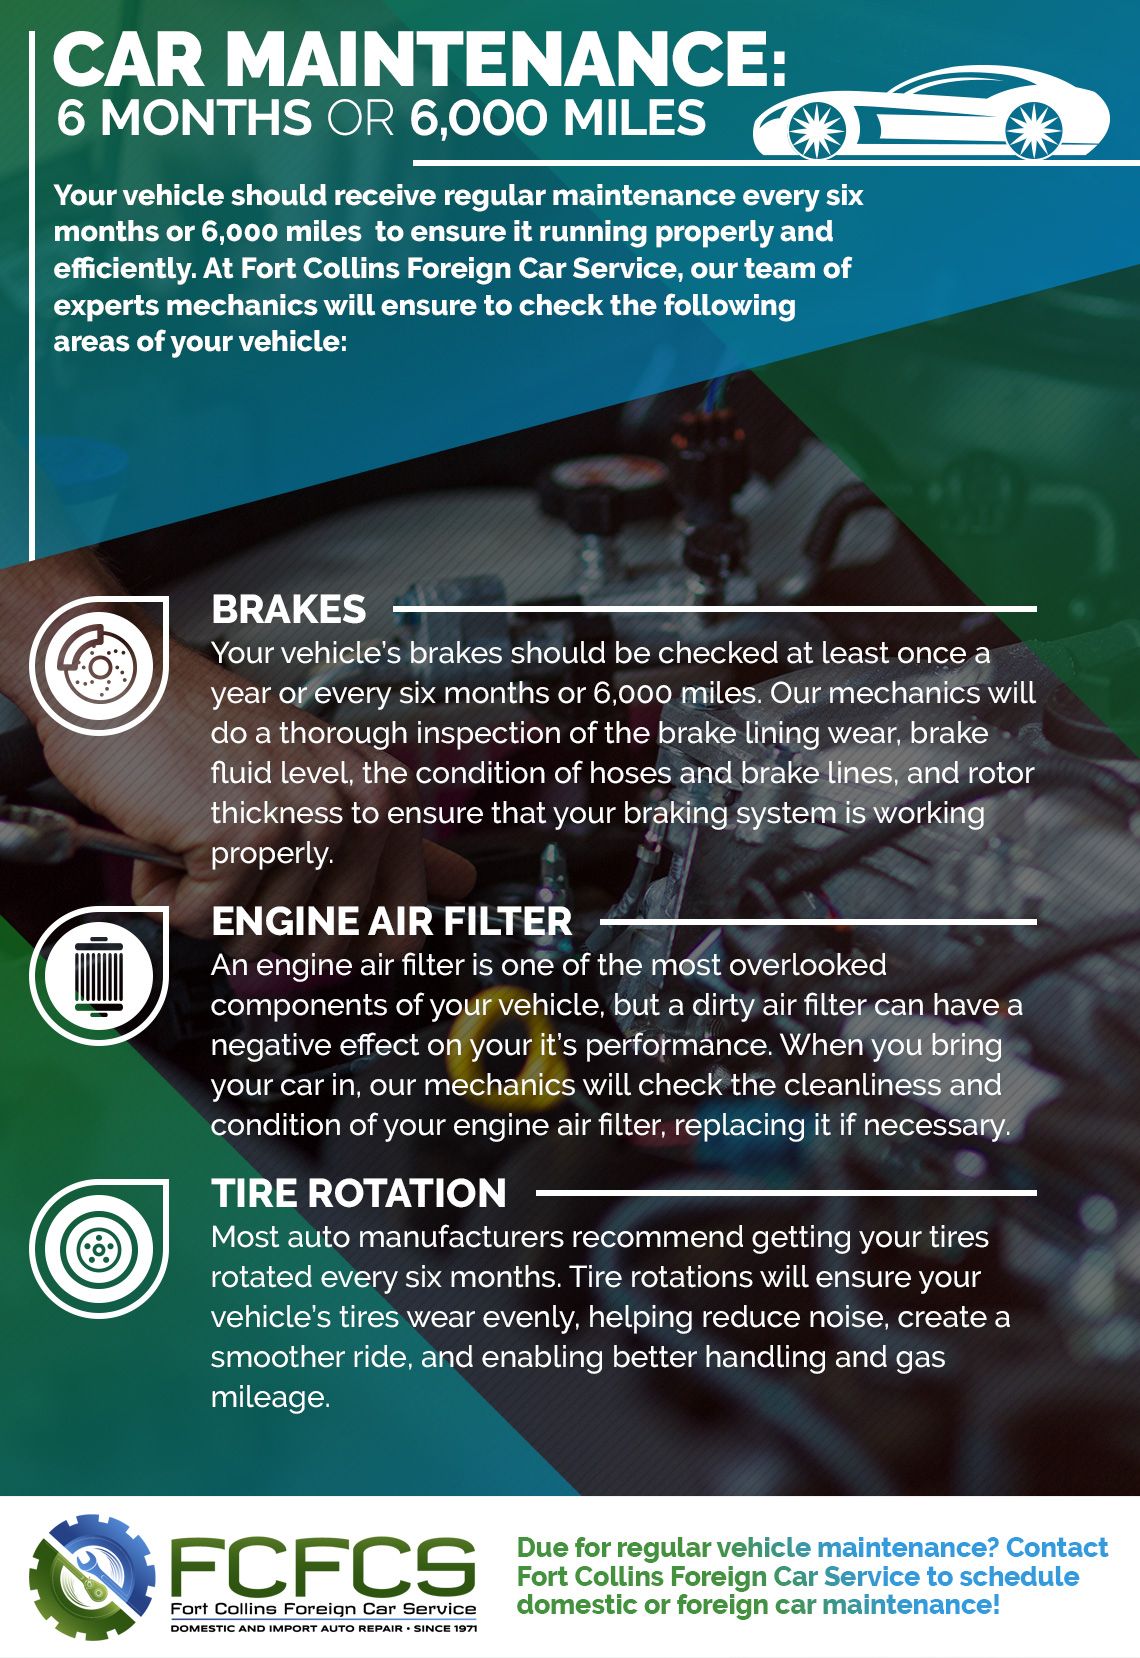 Car Maintenance Infographic